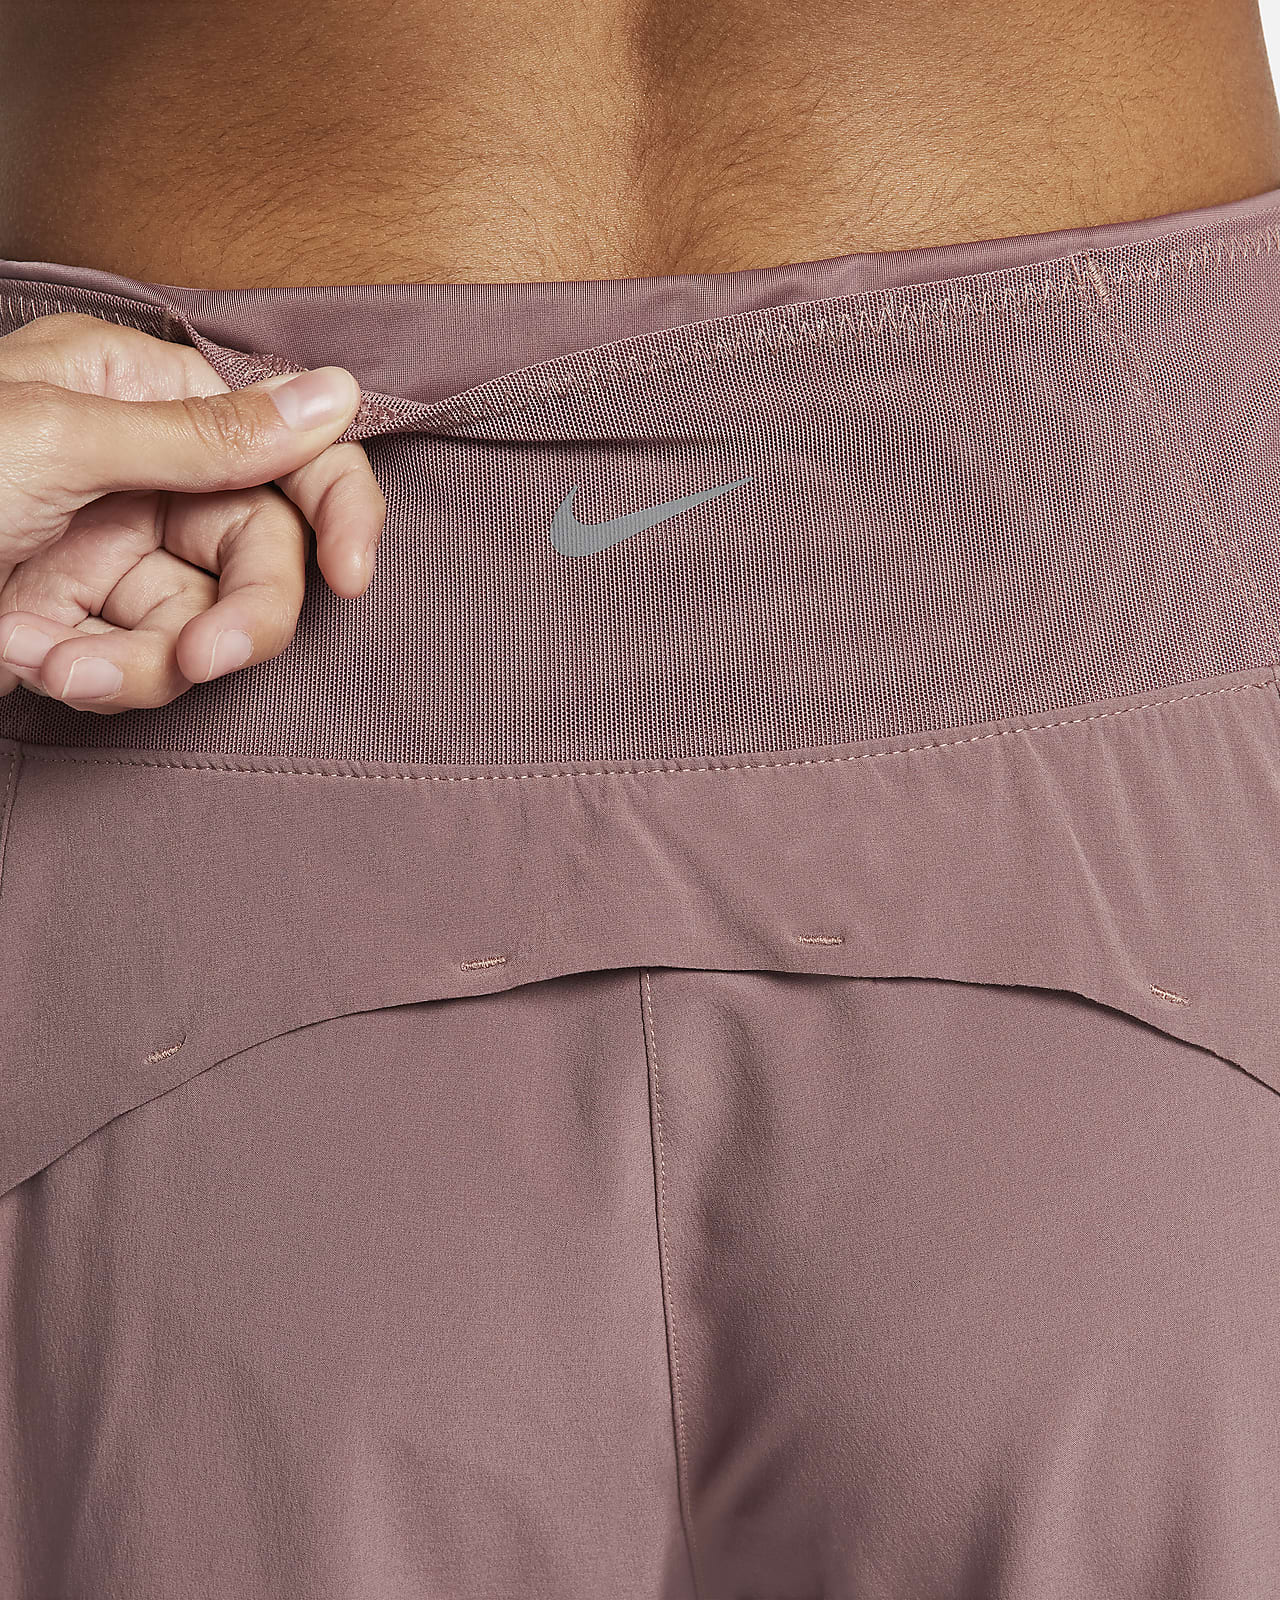 Nike dri fit running pants women Sz Large